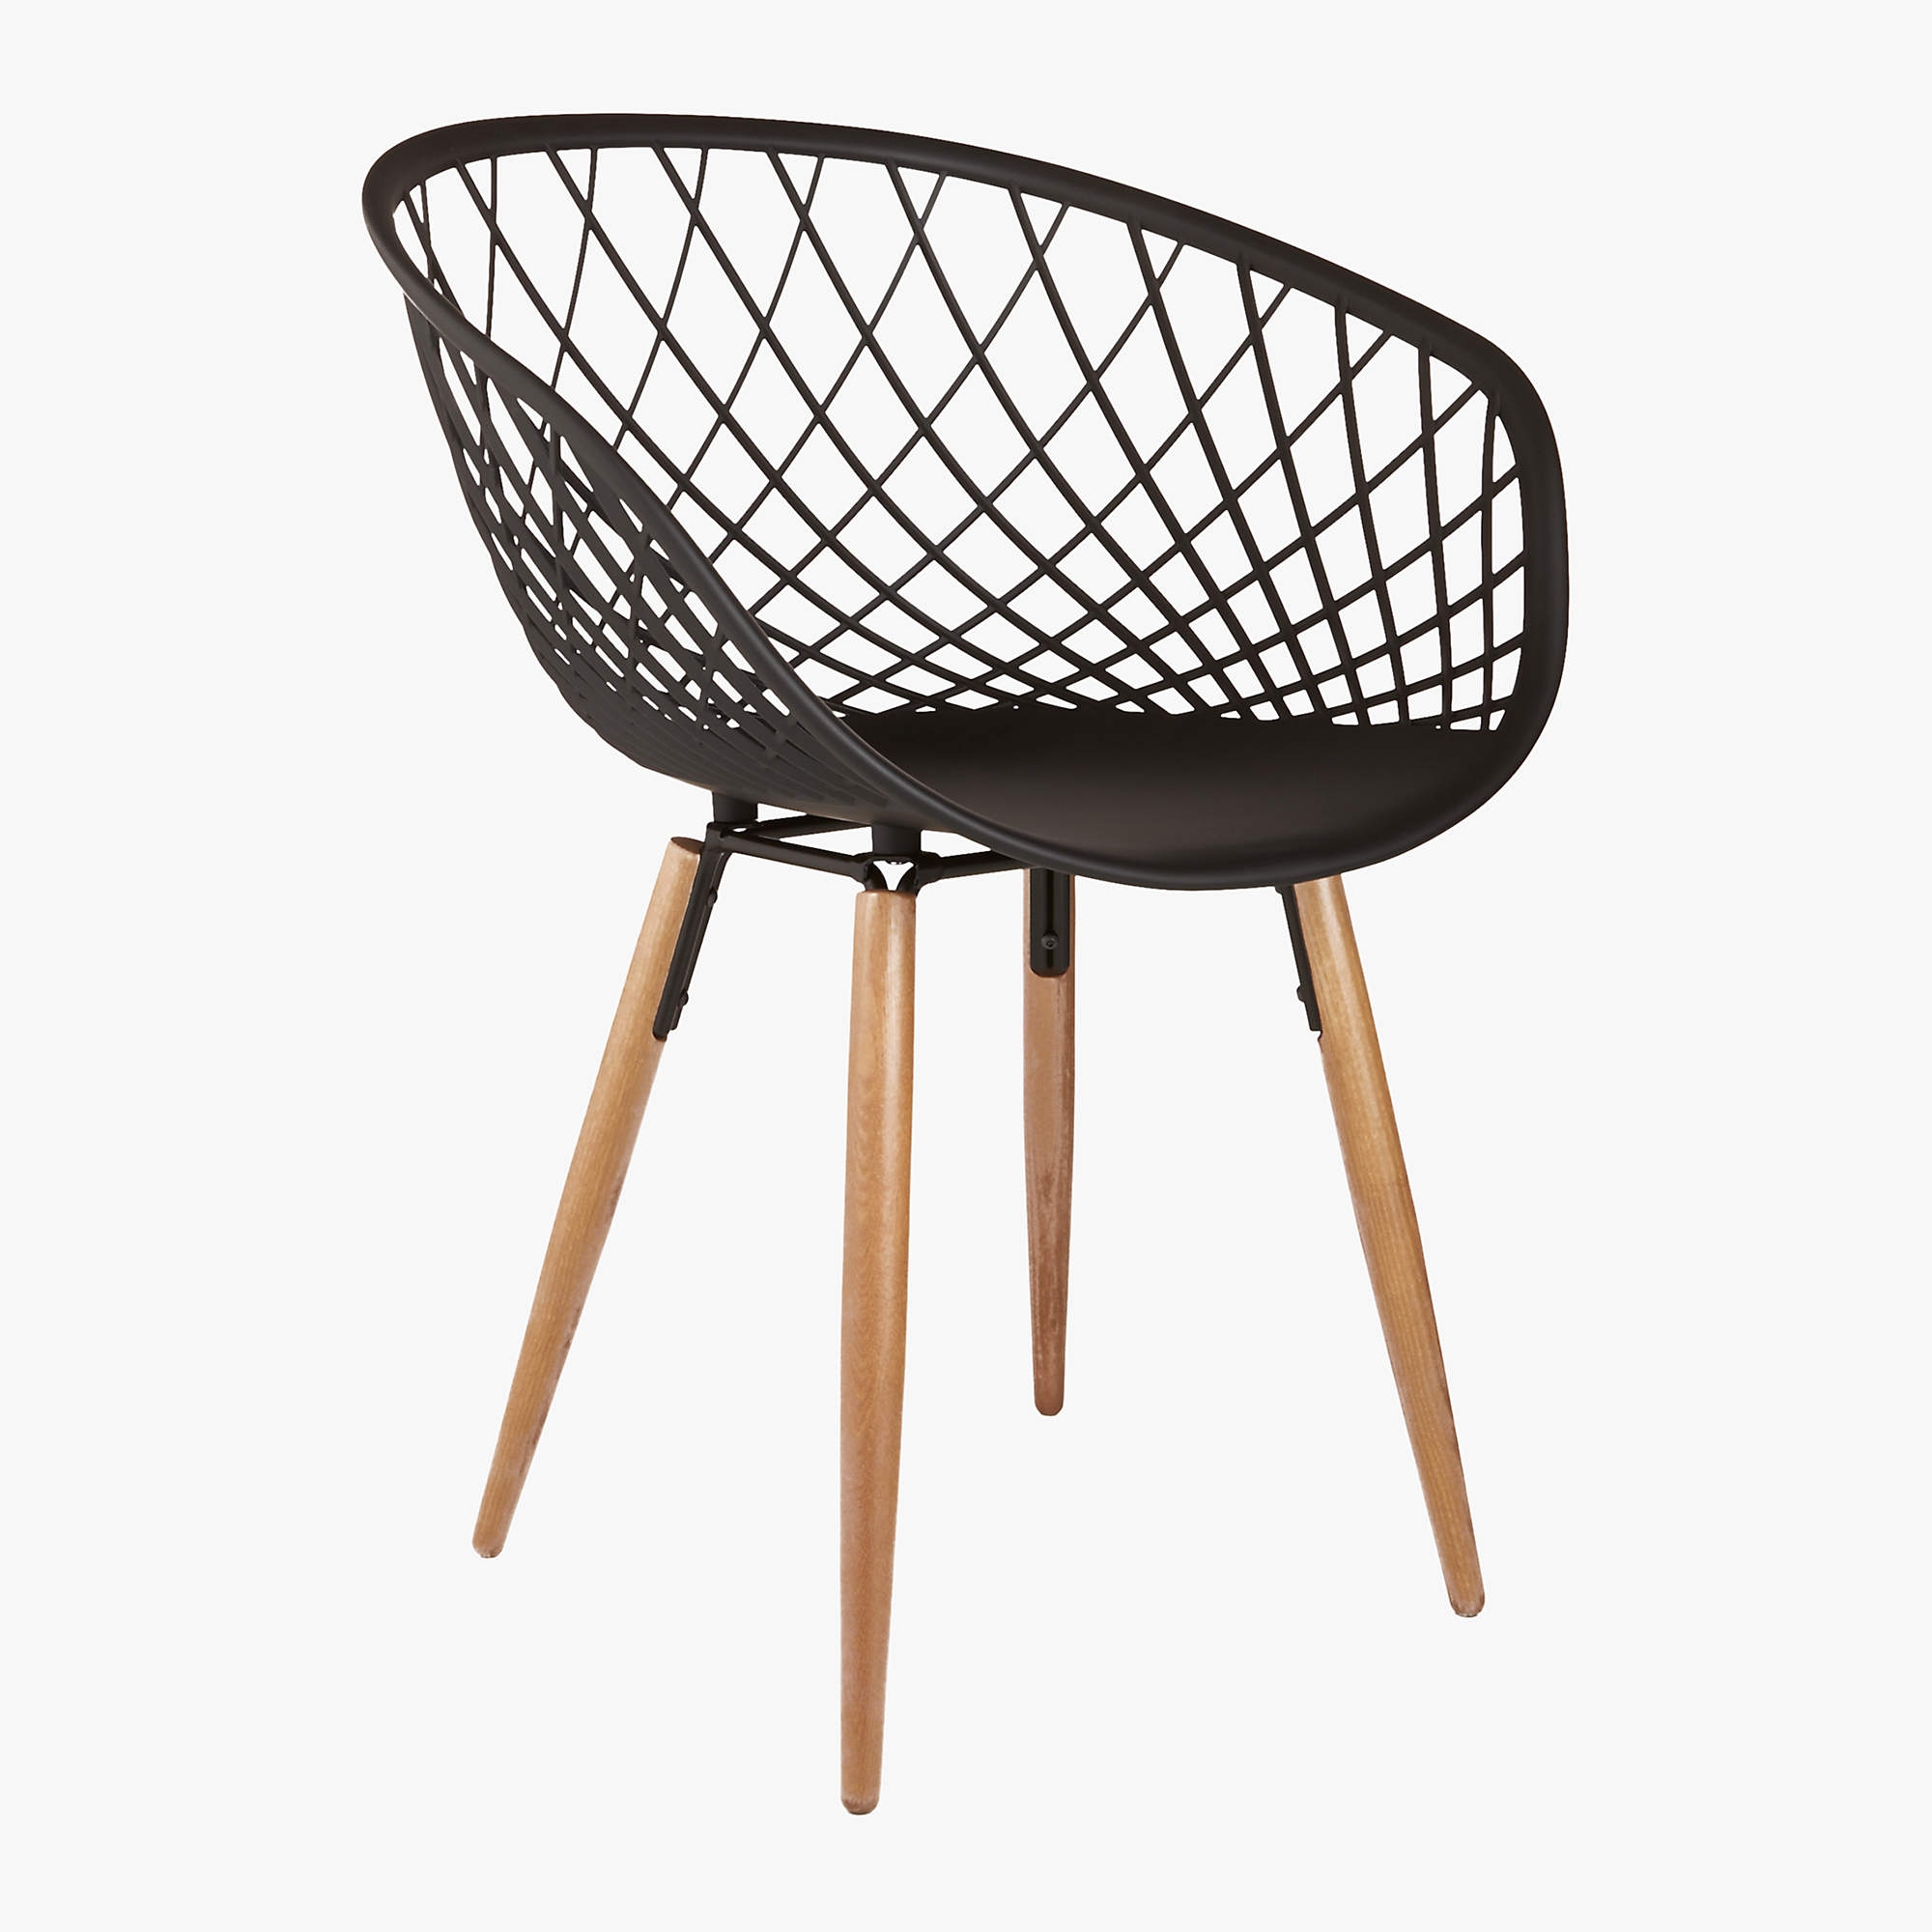 Sidera chair - Image 0